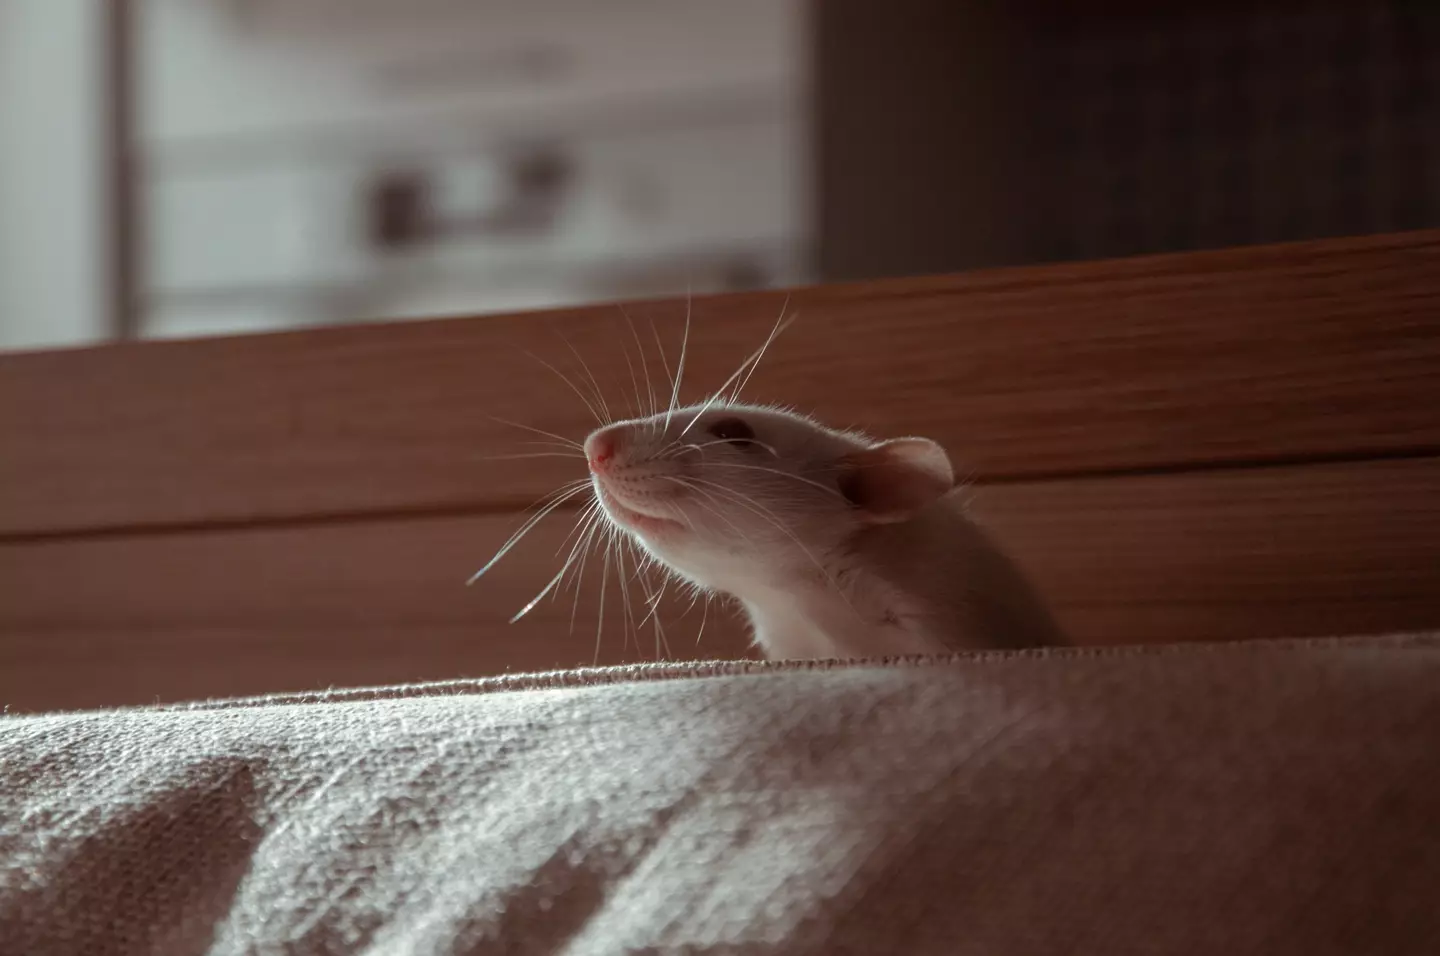 Reddit users have been left baffled by a rat's bulging eyes.